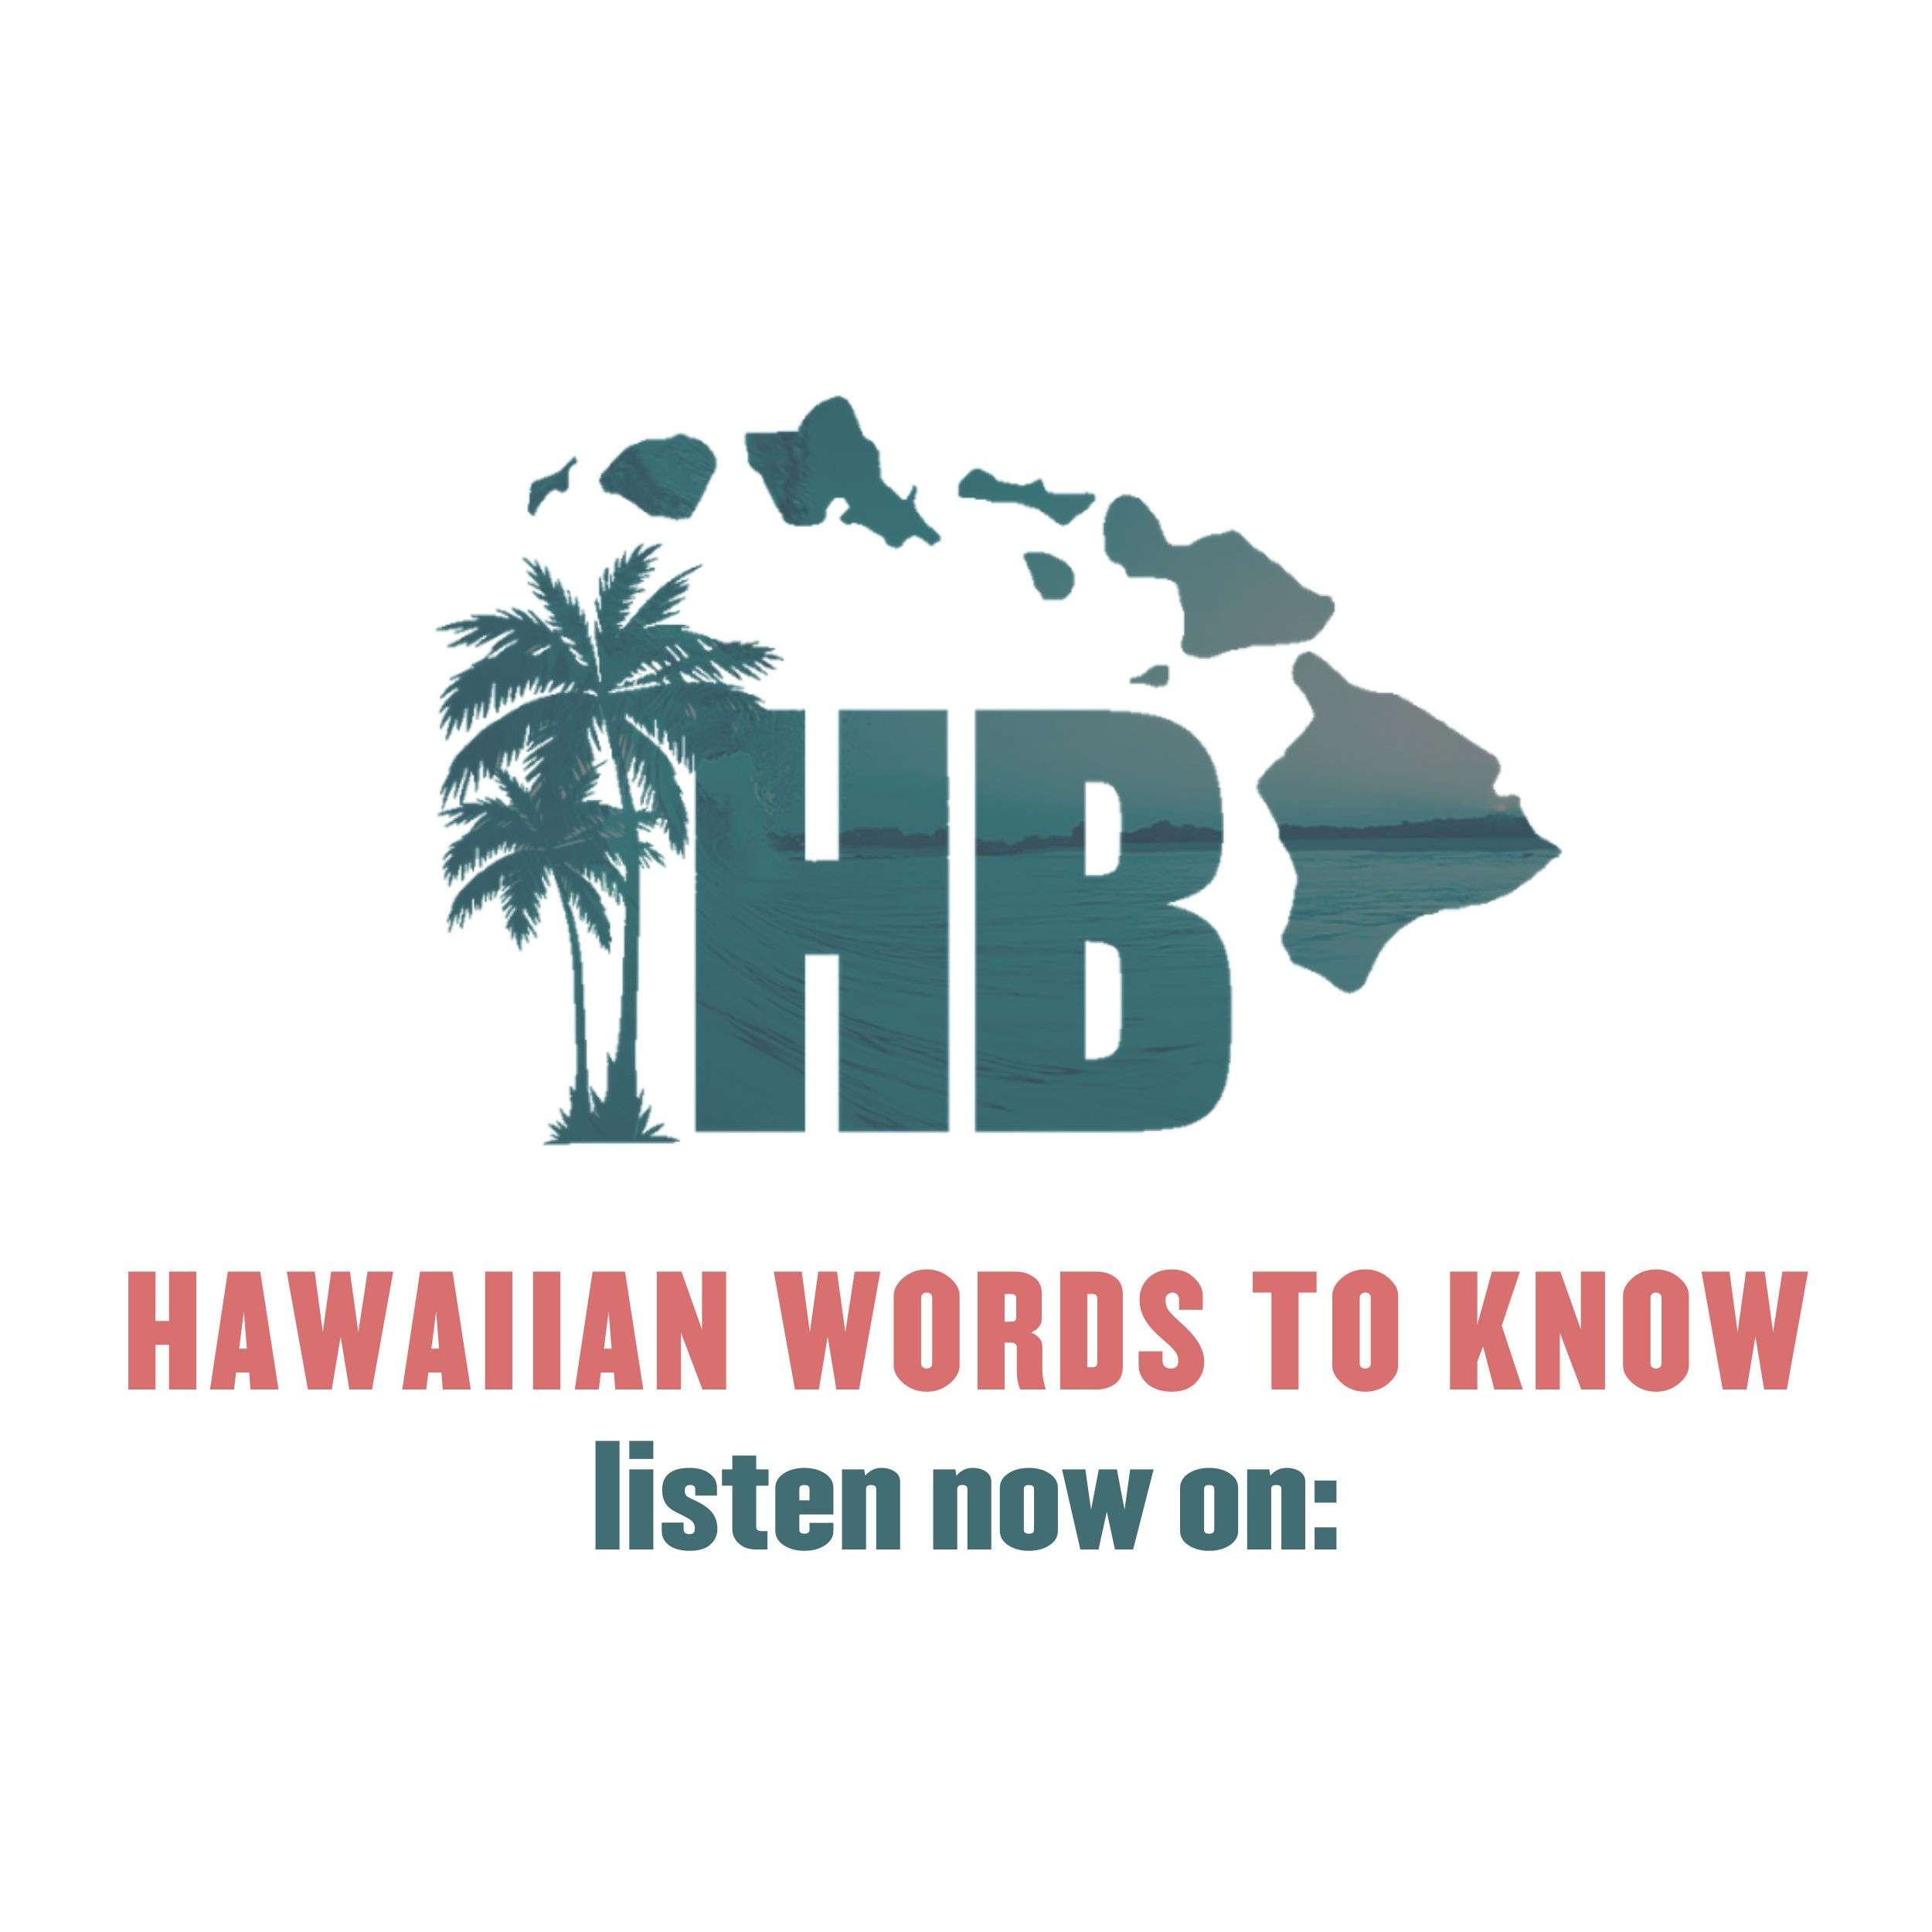 hawaiian words to know before visiting hawaii - hawaii podcast